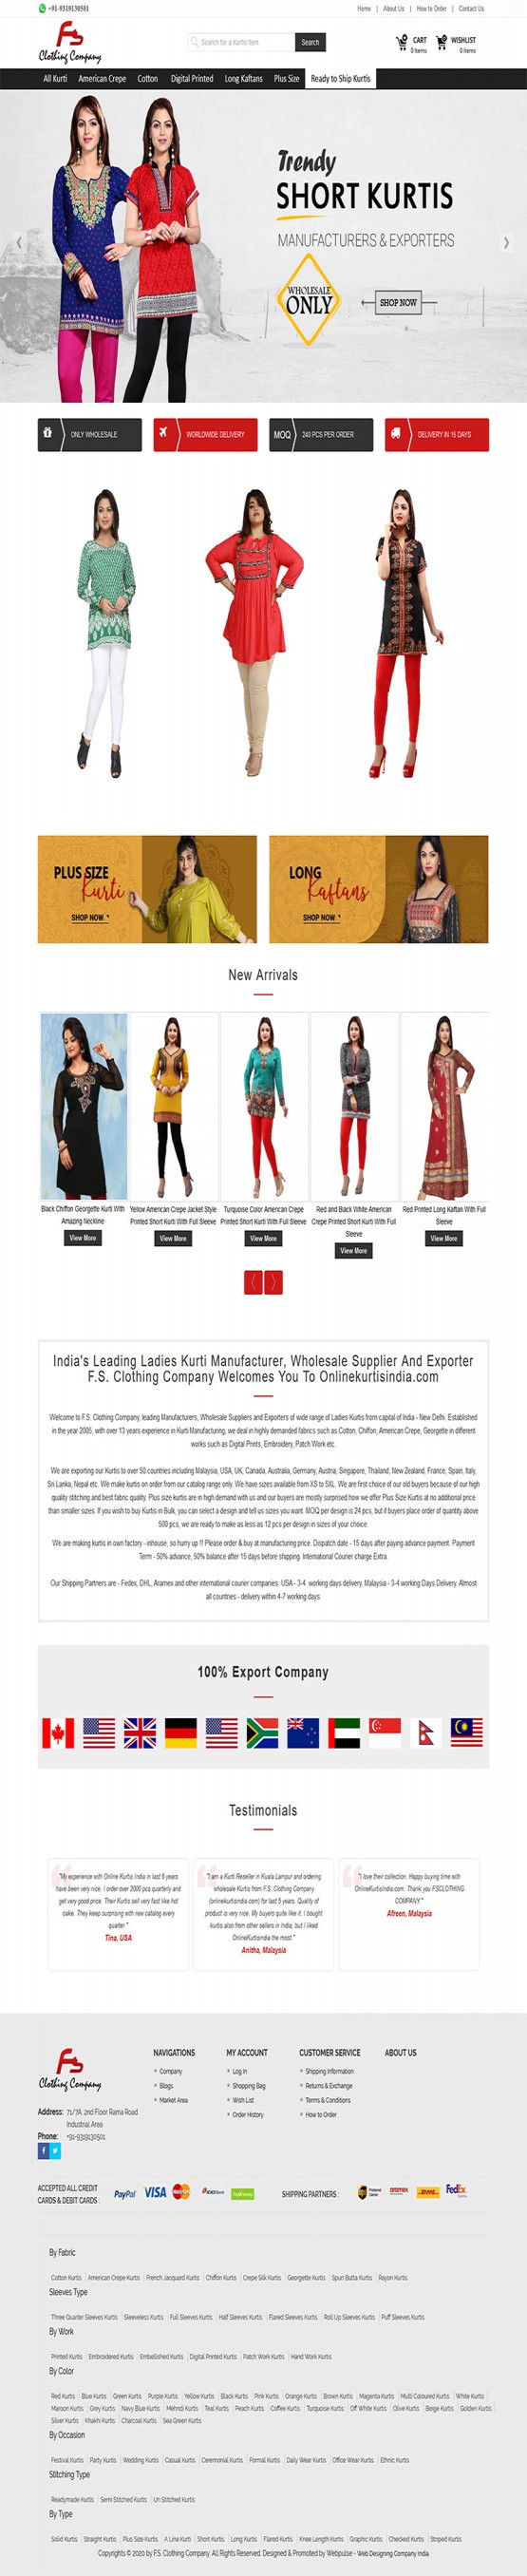 Online Kurtis India - FS Clothing Company